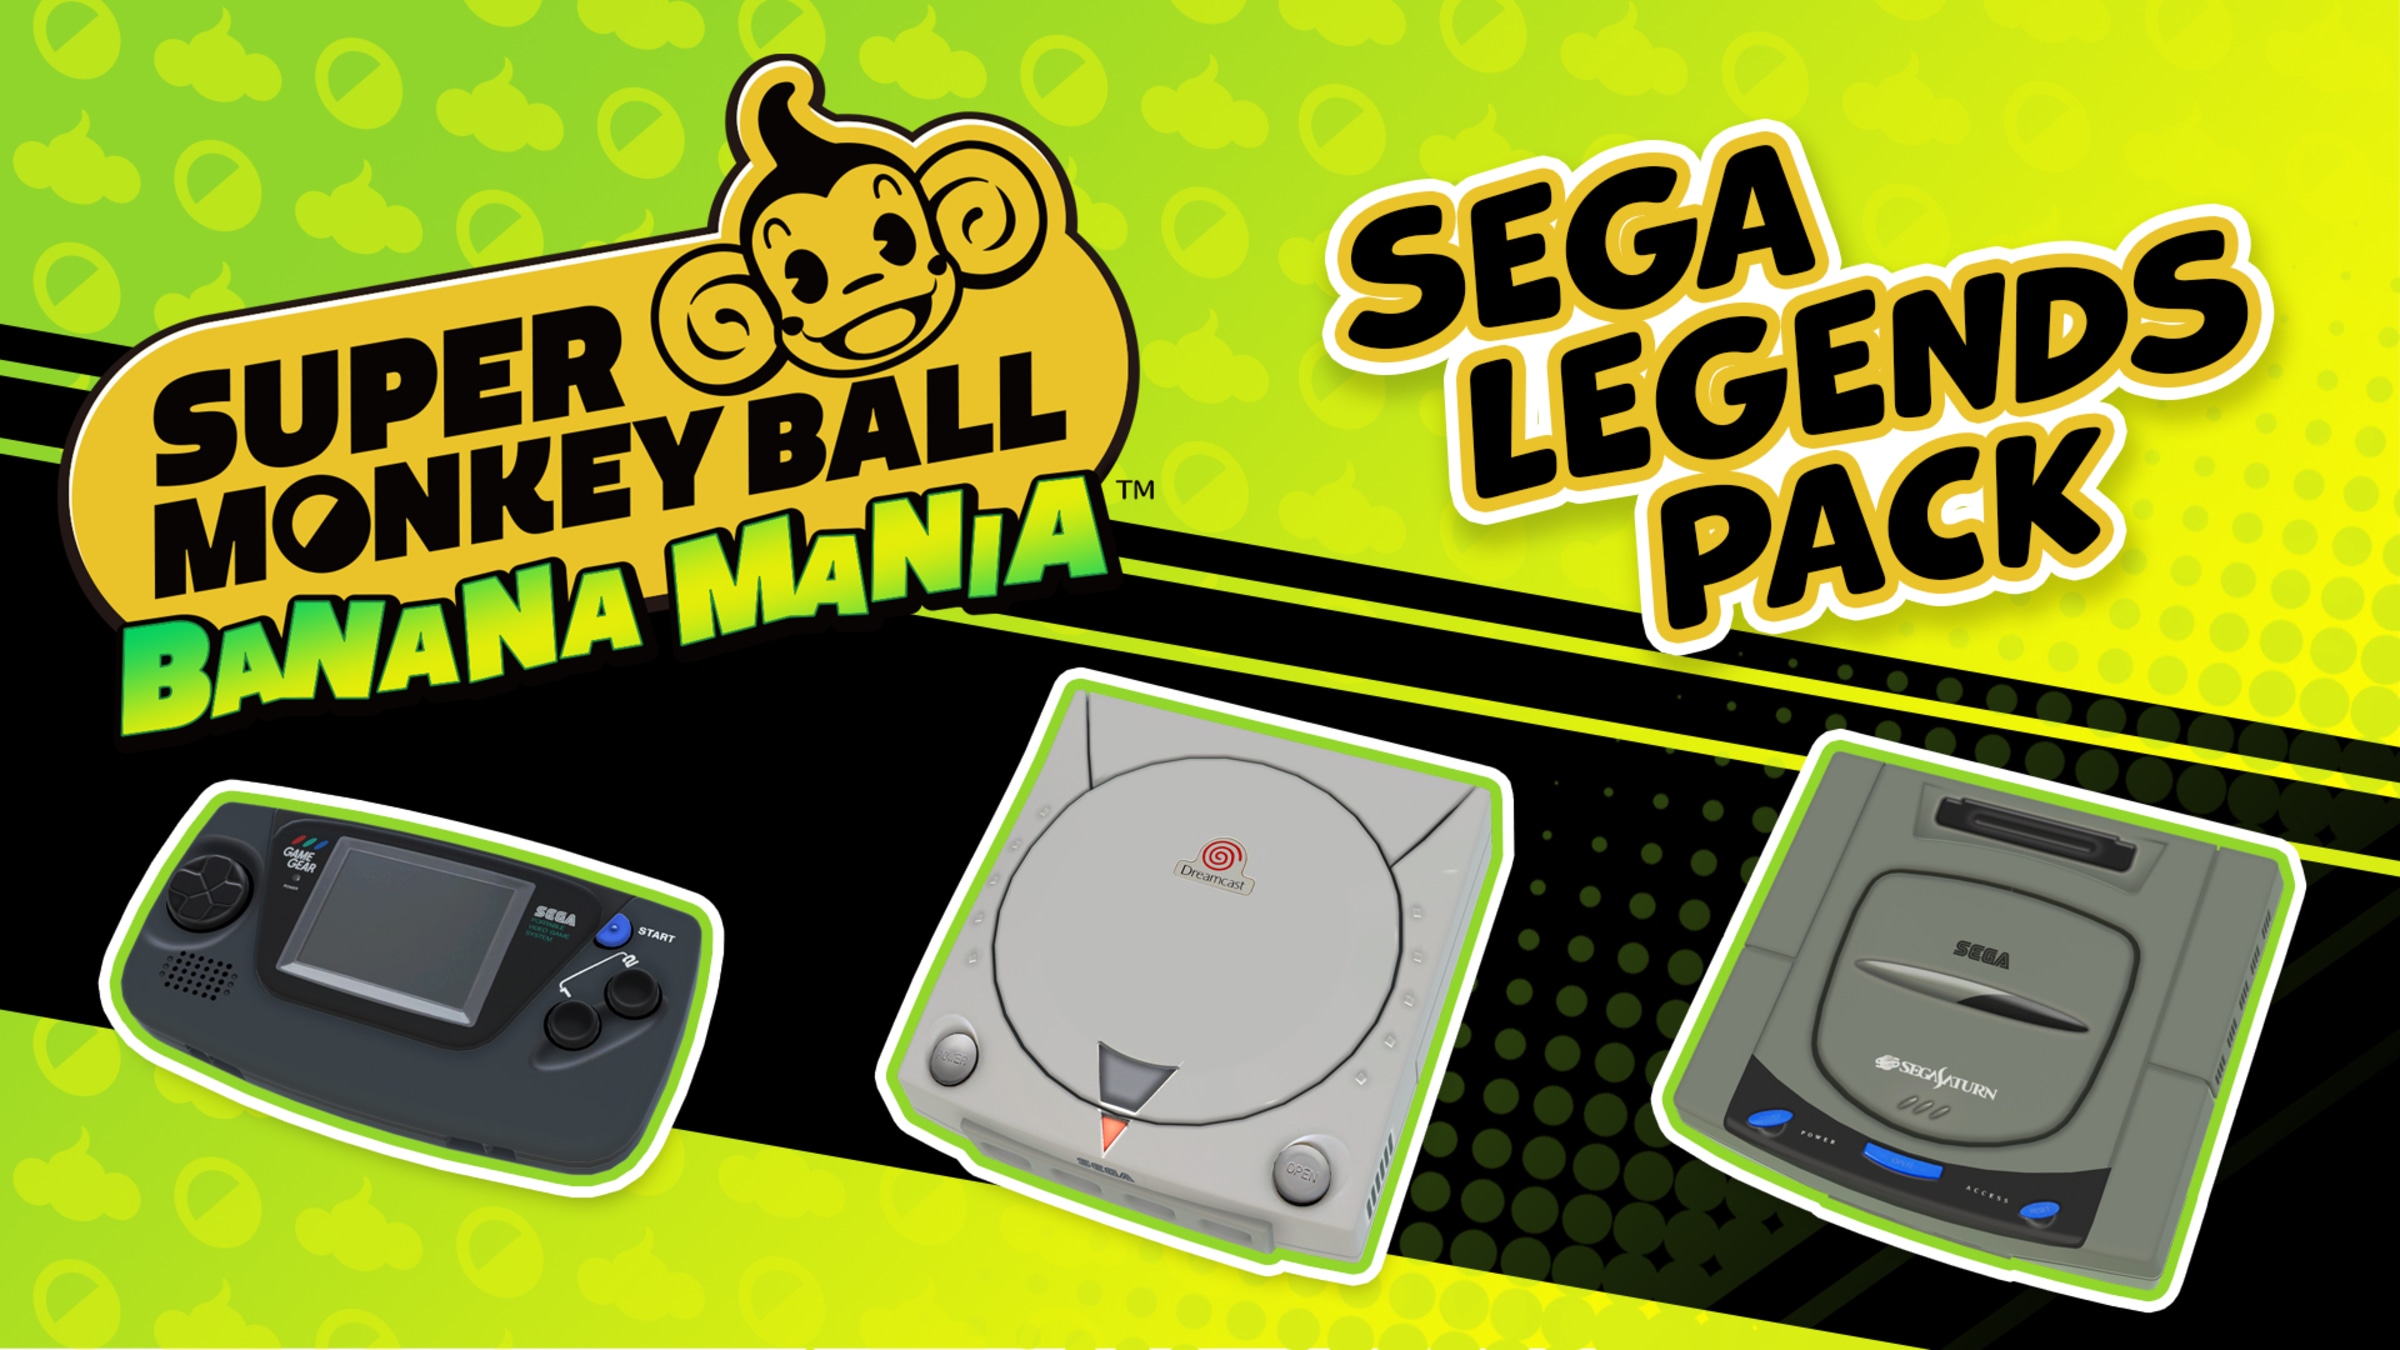 SEGA Legends Pack for Nintendo Switch - Nintendo Official Site for